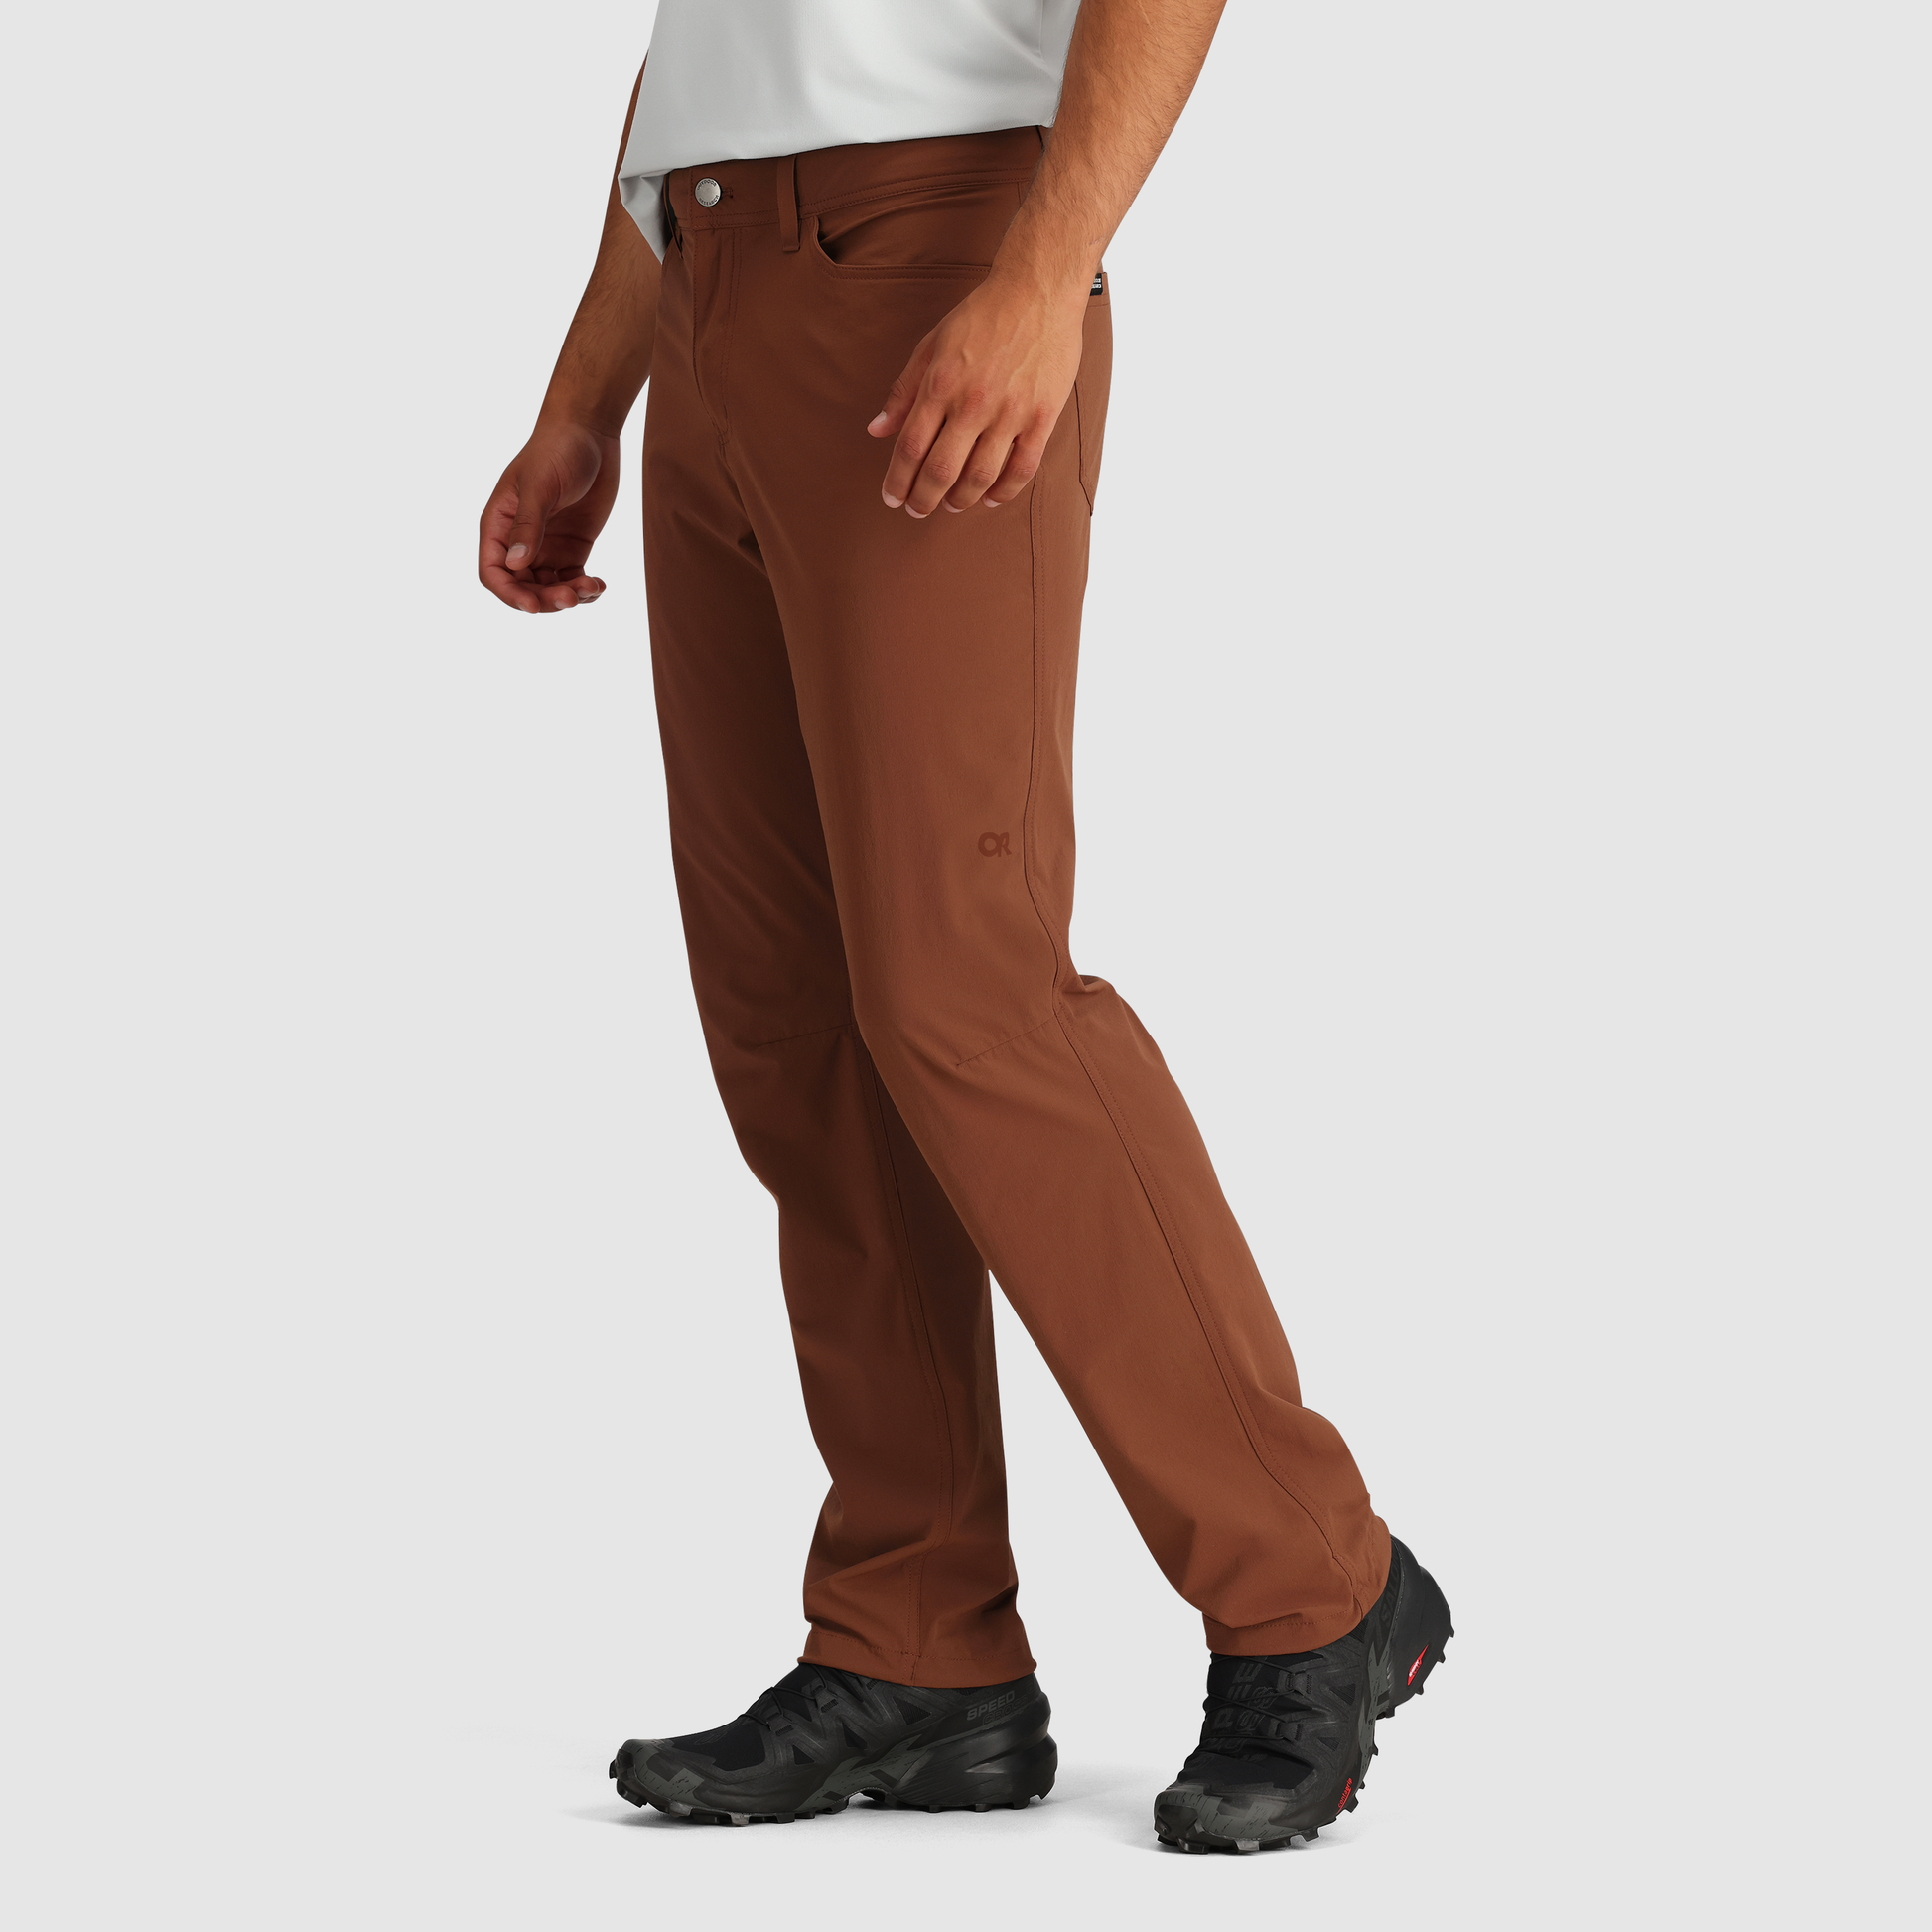 Outdoor Research Men's Ferrosi Pants - 32 Inseam - Pro Khaki, 38